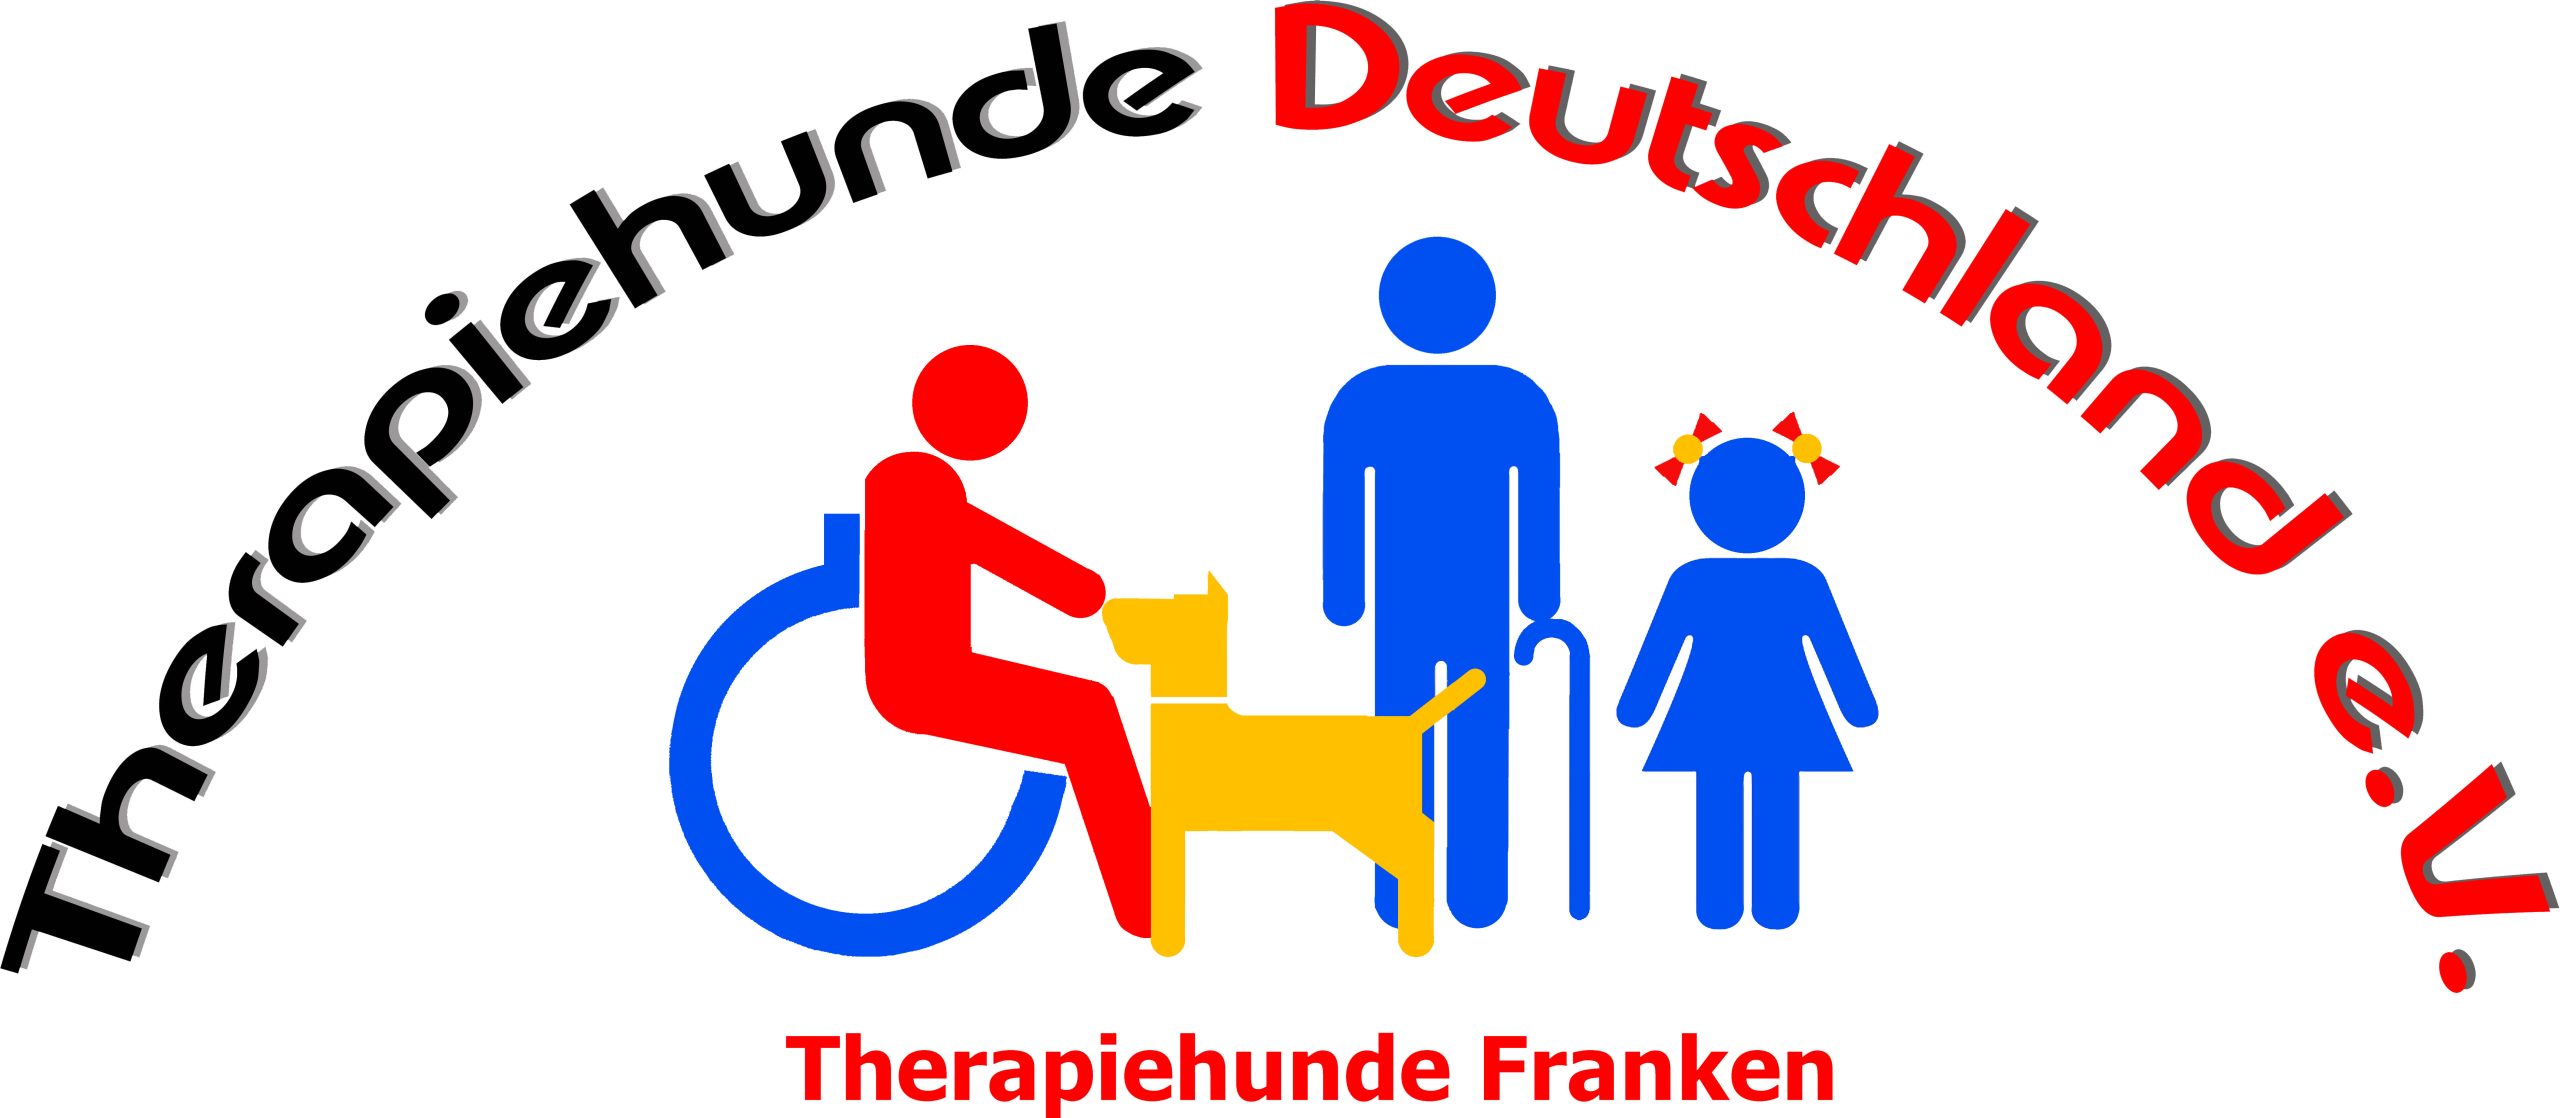 Therapiehunde Deutschland e.V.